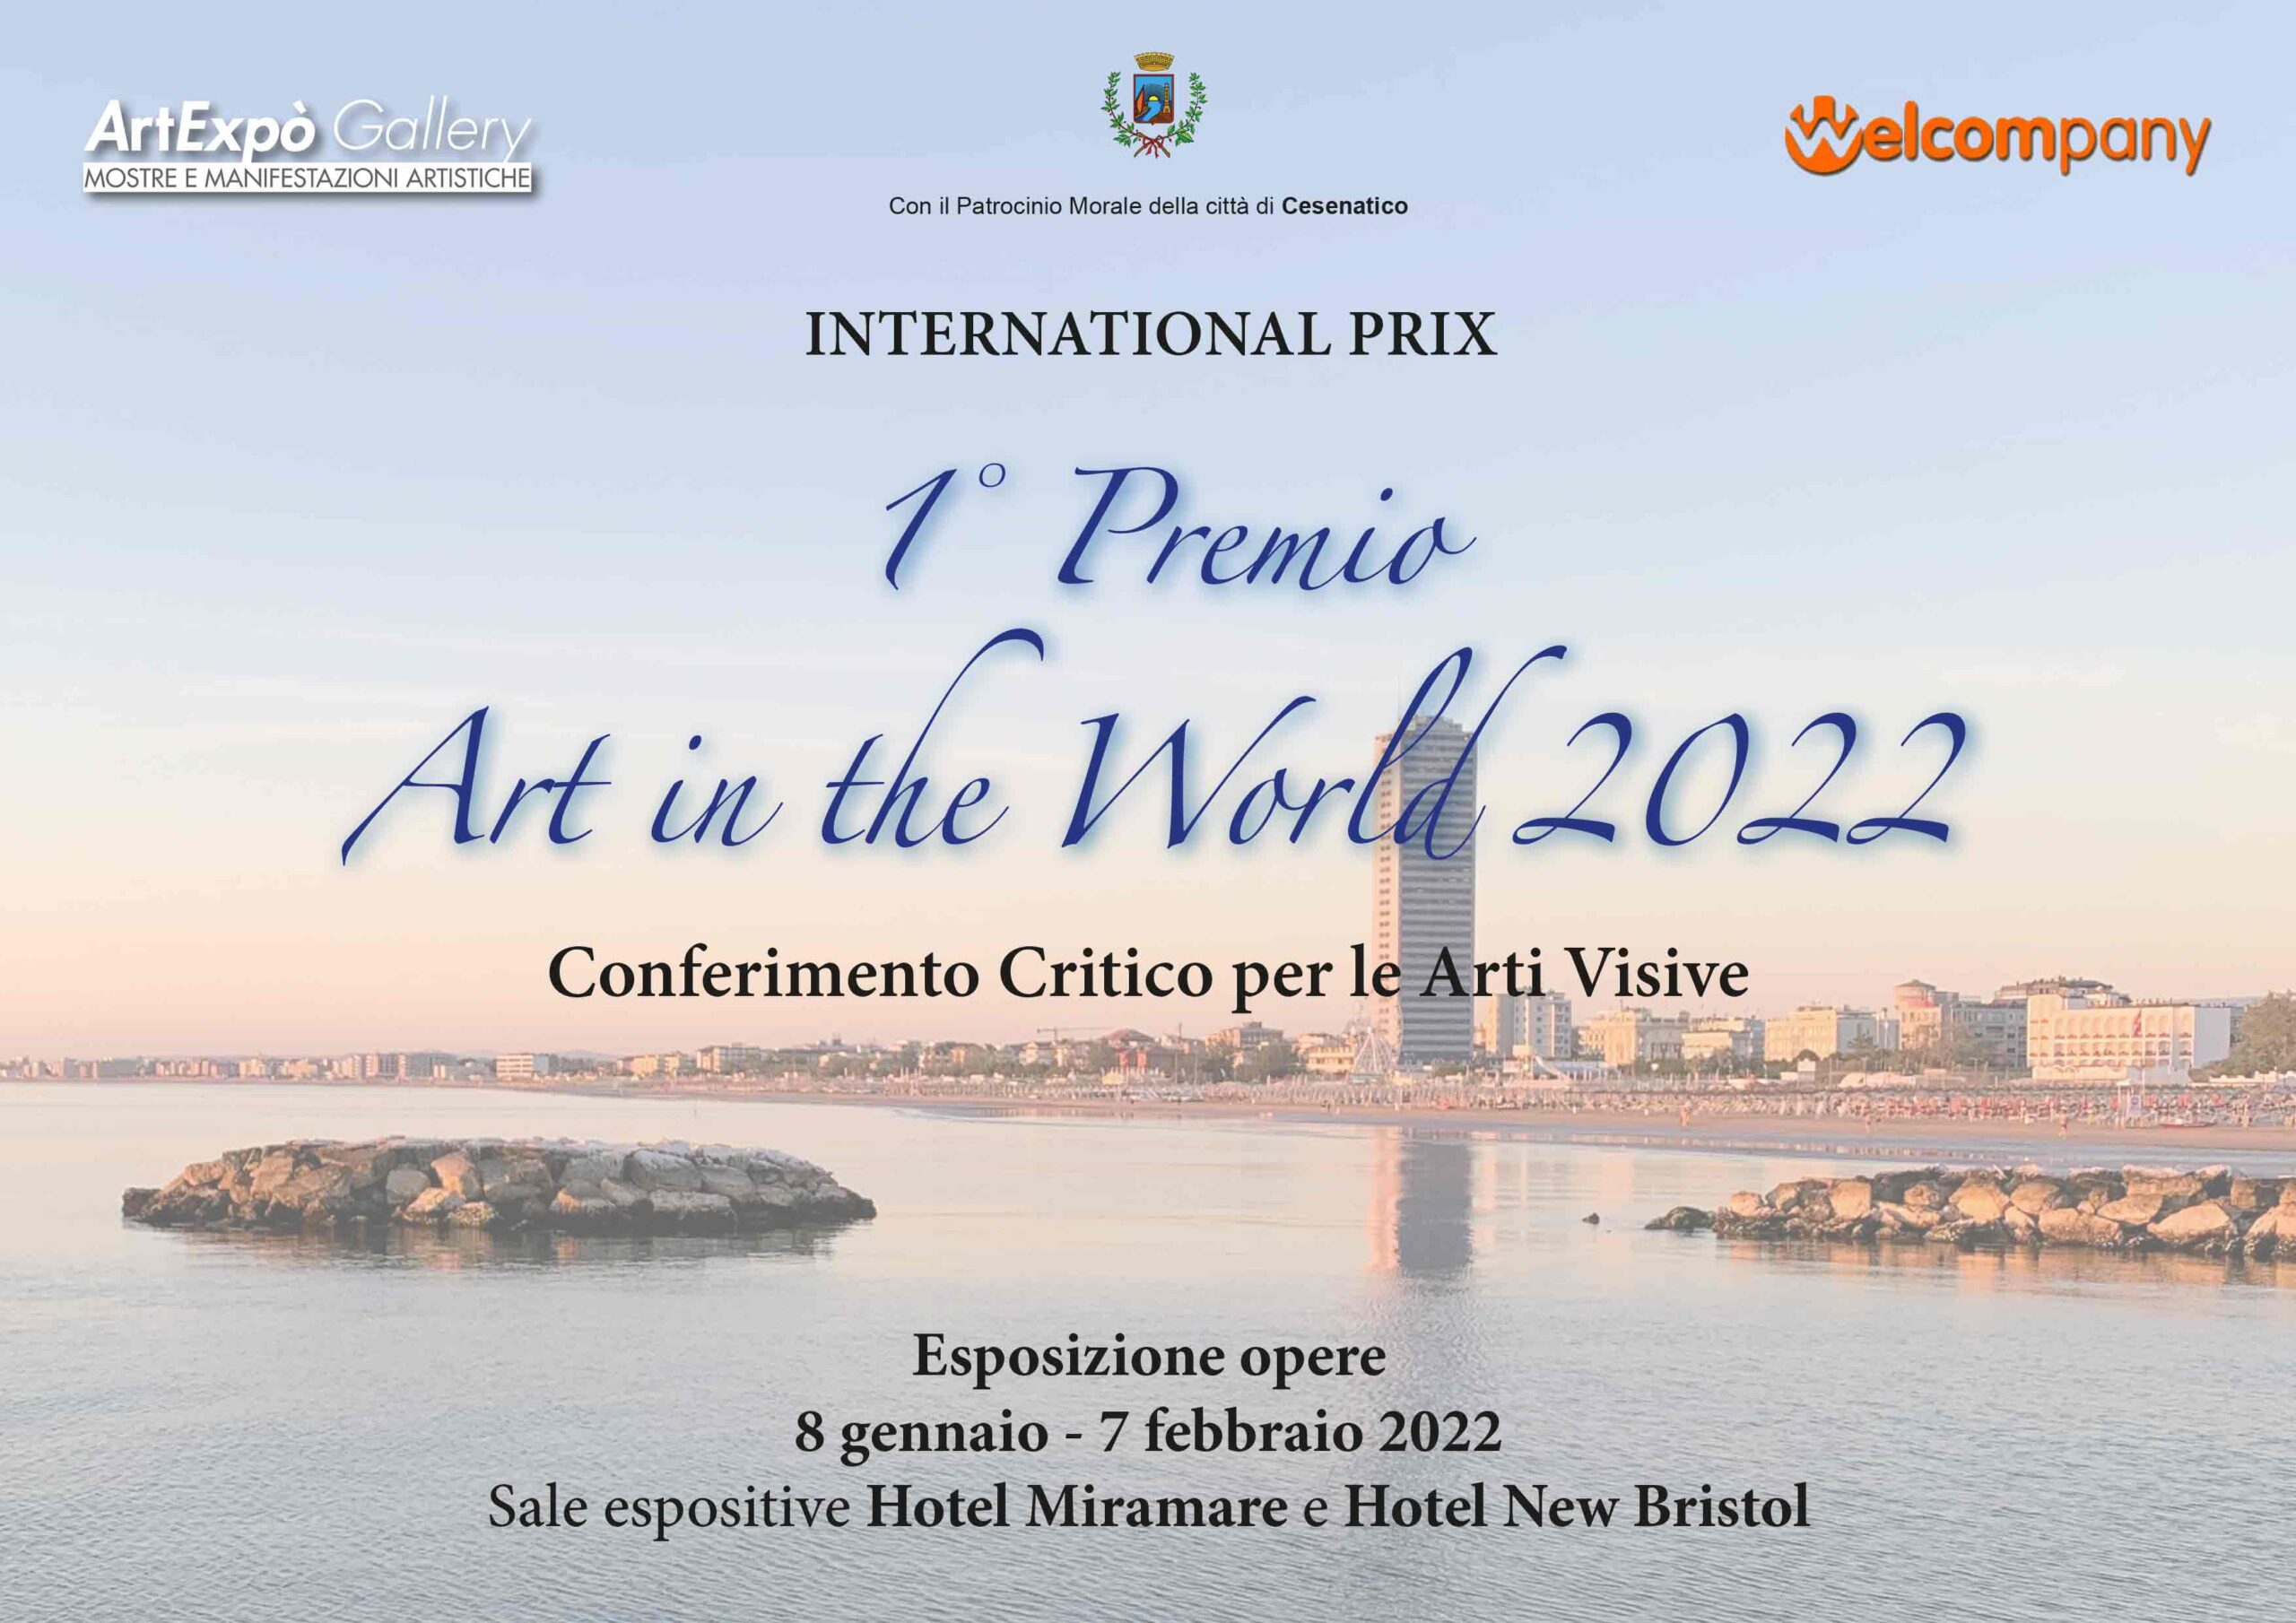 1° Premio “Art in the World” 2022